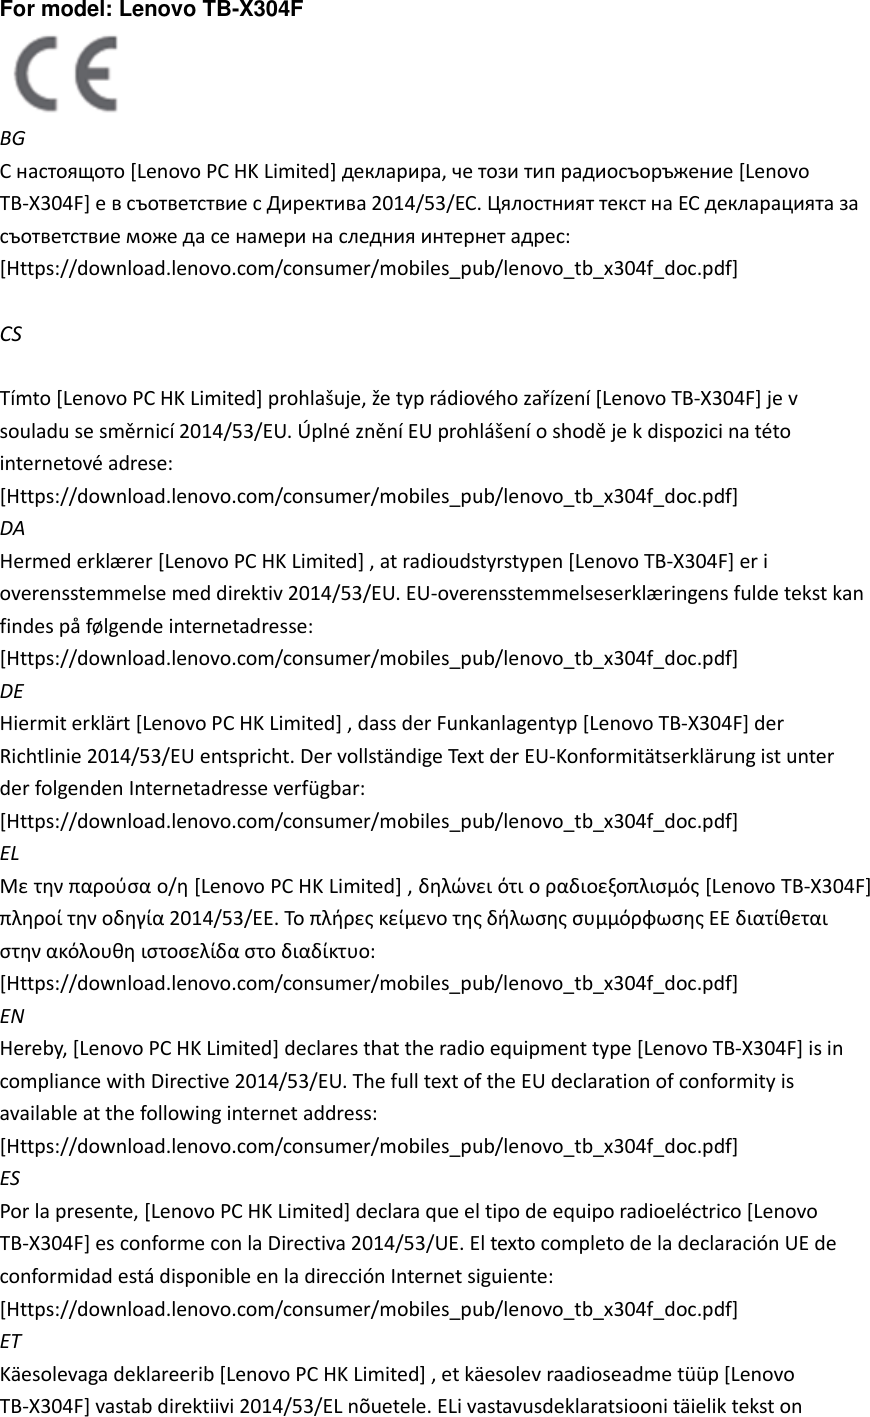 For model: Lenovo TB-X304F    BG С настоящото [Lenovo PC HK Limited] декларира, че този тип радиосъоръжение [Lenovo TB-X304F] е в съответствие с Директива 2014/53/ЕС. Цялостният текст на ЕС декларацията за съответствие може да се намери на следния интернет адрес: [Https://download.lenovo.com/consumer/mobiles_pub/lenovo_tb_x304f_doc.pdf]    CS  Tímto [Lenovo PC HK Limited] prohlašuje, že typ rádiového zařízení [Lenovo TB-X304F] je v souladu se směrnicí 2014/53/EU. Úplné znění EU prohlášení o shodě je k dispozici na této internetové adrese: [Https://download.lenovo.com/consumer/mobiles_pub/lenovo_tb_x304f_doc.pdf]   DA Hermed erklæ rer [Lenovo PC HK Limited] , at radioudstyrstypen [Lenovo TB-X304F] er i overensstemmelse med direktiv 2014/53/EU. EU-overensstemmelseserklæ ringens fulde tekst kan findes på følgende internetadresse: [Https://download.lenovo.com/consumer/mobiles_pub/lenovo_tb_x304f_doc.pdf]   DE Hiermit erklärt [Lenovo PC HK Limited] , dass der Funkanlagentyp [Lenovo TB-X304F] der Richtlinie 2014/53/EU entspricht. Der vollständige Text der EU-Konformitätserklärung ist unter der folgenden Internetadresse verfügbar: [Https://download.lenovo.com/consumer/mobiles_pub/lenovo_tb_x304f_doc.pdf]   EL Με την παρούσα ο/η [Lenovo PC HK Limited] , δηλώνει ότι ο ραδιοεξοπλισμός [Lenovo TB-X304F] πληροί την οδηγία 2014/53/ΕΕ. Το πλήρες κείμενο της δήλωσης συμμόρφωσης ΕΕ διατίθεται στην ακόλουθη ιστοσελίδα στο διαδίκτυο: [Https://download.lenovo.com/consumer/mobiles_pub/lenovo_tb_x304f_doc.pdf]   EN Hereby, [Lenovo PC HK Limited] declares that the radio equipment type [Lenovo TB-X304F] is in compliance with Directive 2014/53/EU. The full text of the EU declaration of conformity is available at the following internet address: [Https://download.lenovo.com/consumer/mobiles_pub/lenovo_tb_x304f_doc.pdf]   ES Por la presente, [Lenovo PC HK Limited] declara que el tipo de equipo radioeléctrico [Lenovo TB-X304F] es conforme con la Directiva 2014/53/UE. El texto completo de la declaración UE de conformidad está disponible en la dirección Internet siguiente: [Https://download.lenovo.com/consumer/mobiles_pub/lenovo_tb_x304f_doc.pdf]   ET Käesolevaga deklareerib [Lenovo PC HK Limited] , et käesolev raadioseadme tüüp [Lenovo TB-X304F] vastab direktiivi 2014/53/EL nõuetele. ELi vastavusdeklaratsiooni täielik tekst on 